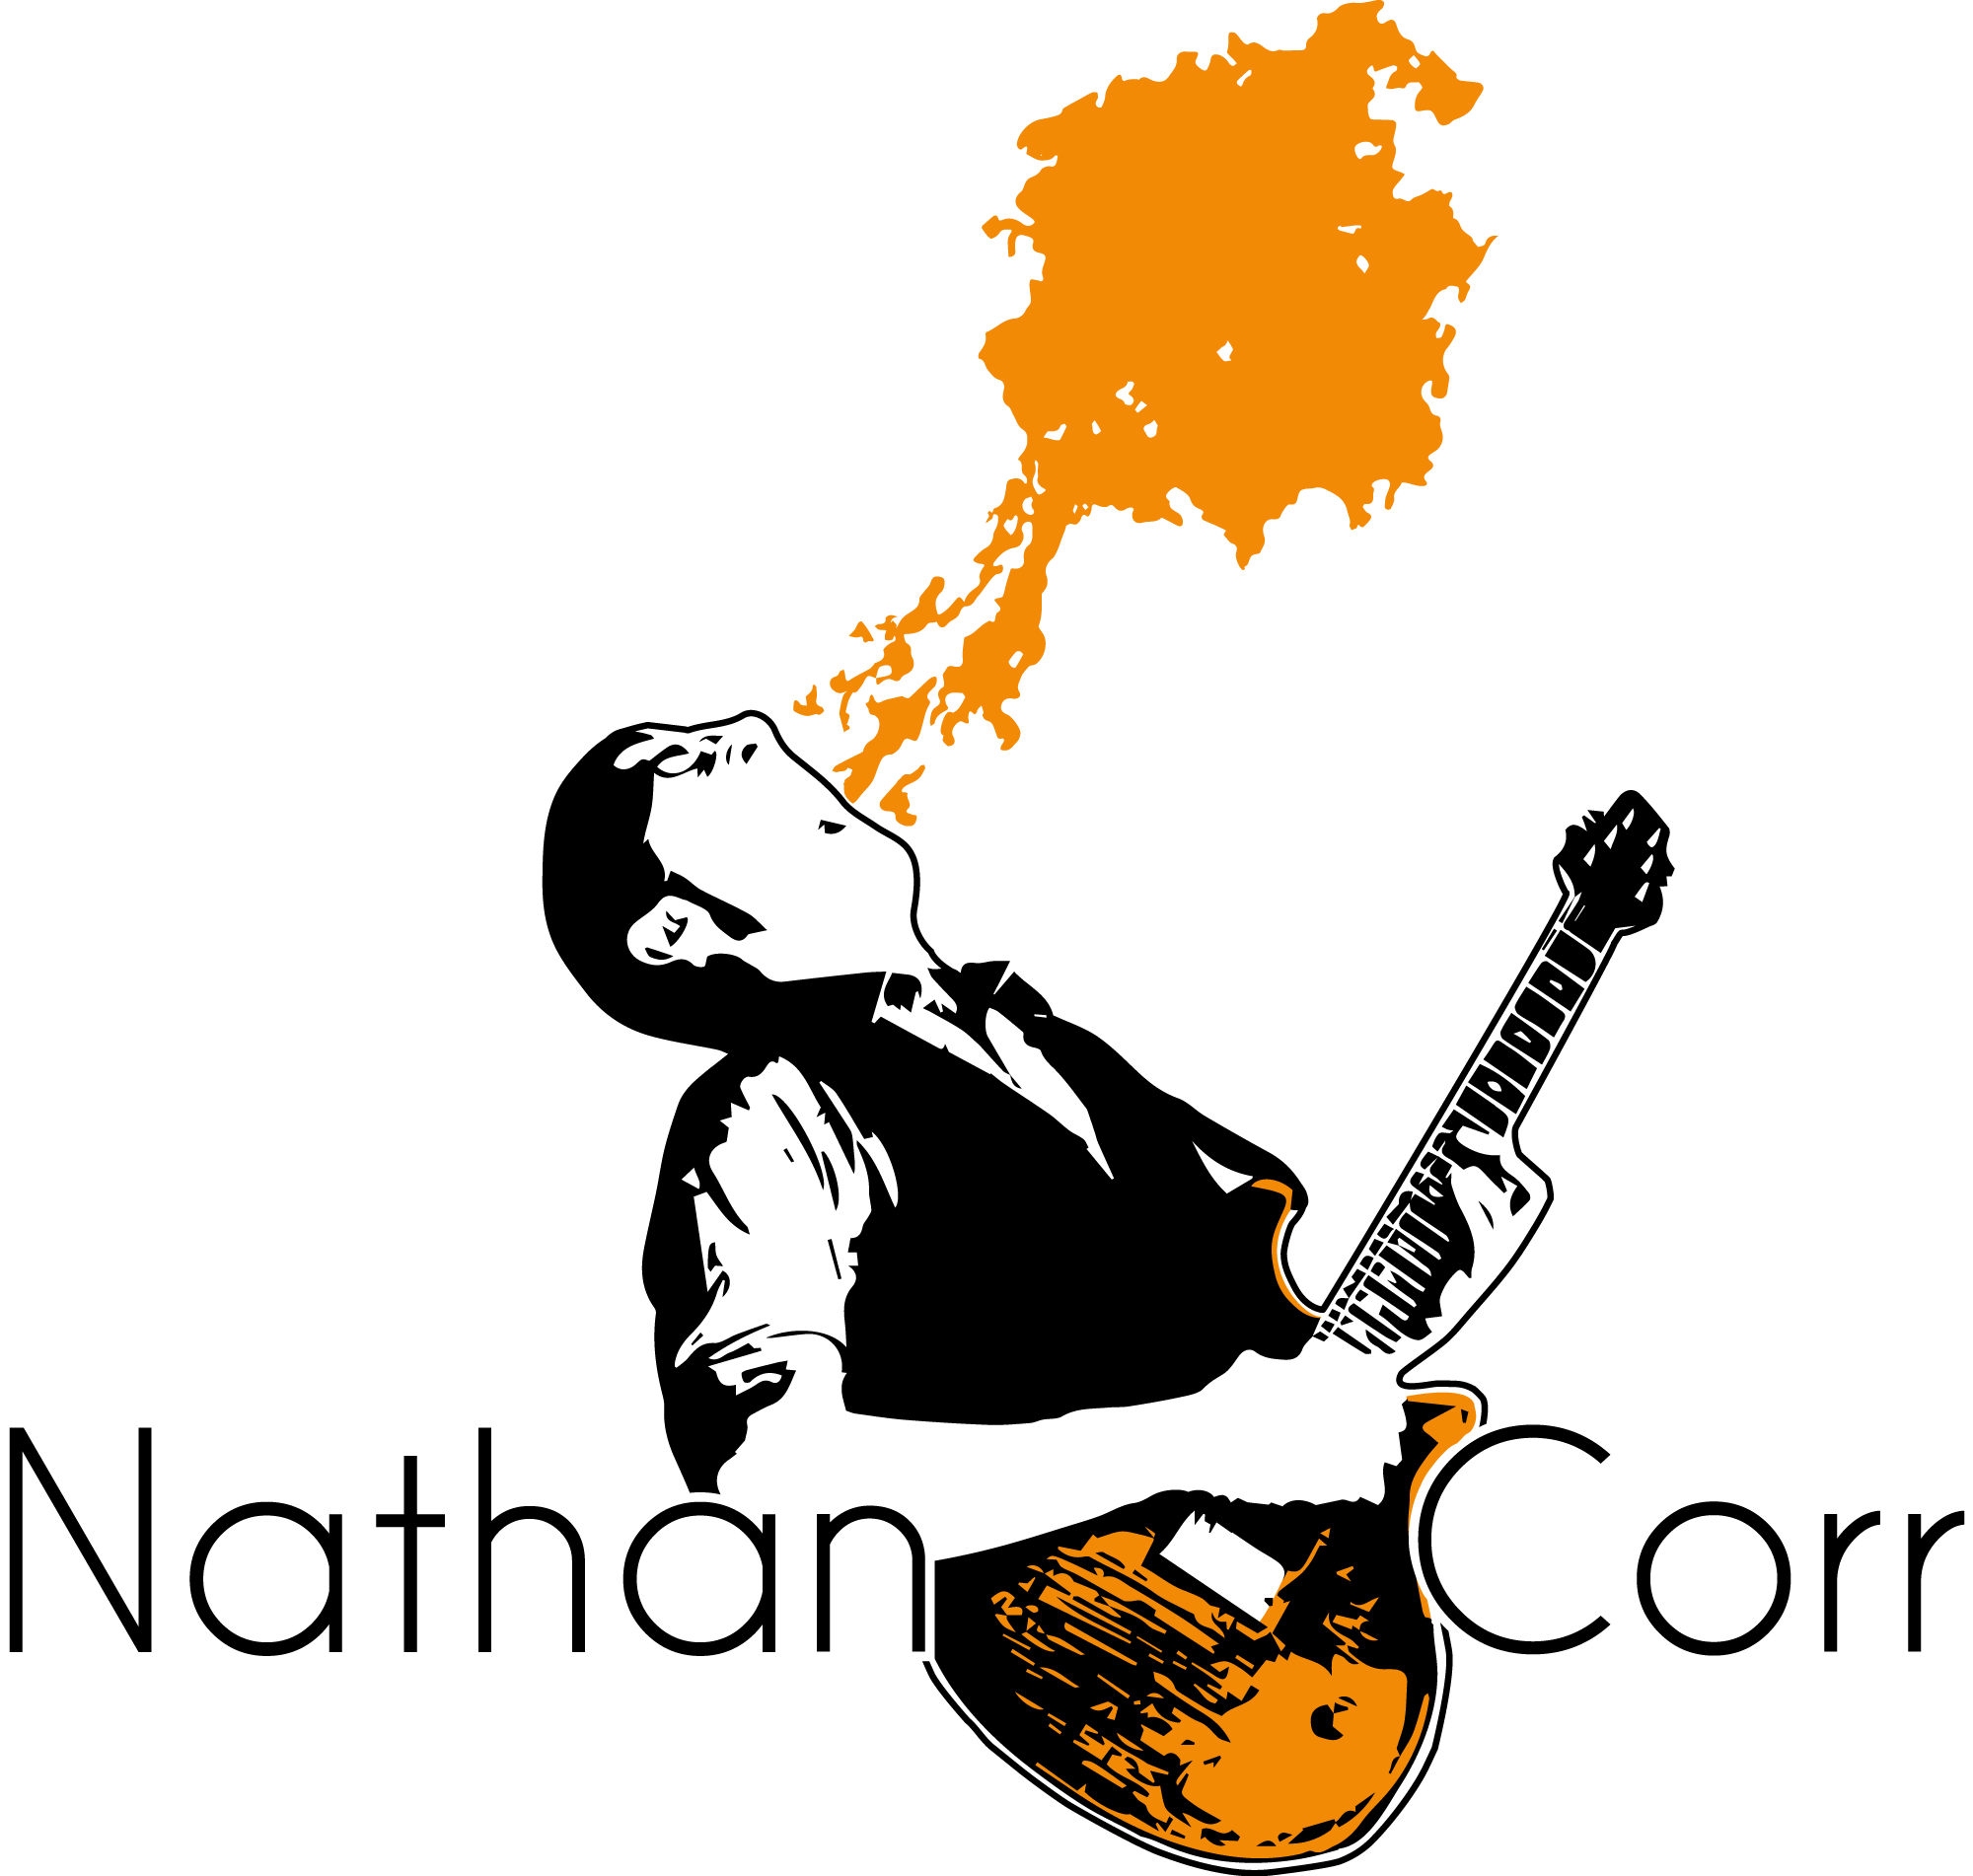 Nathan Corr